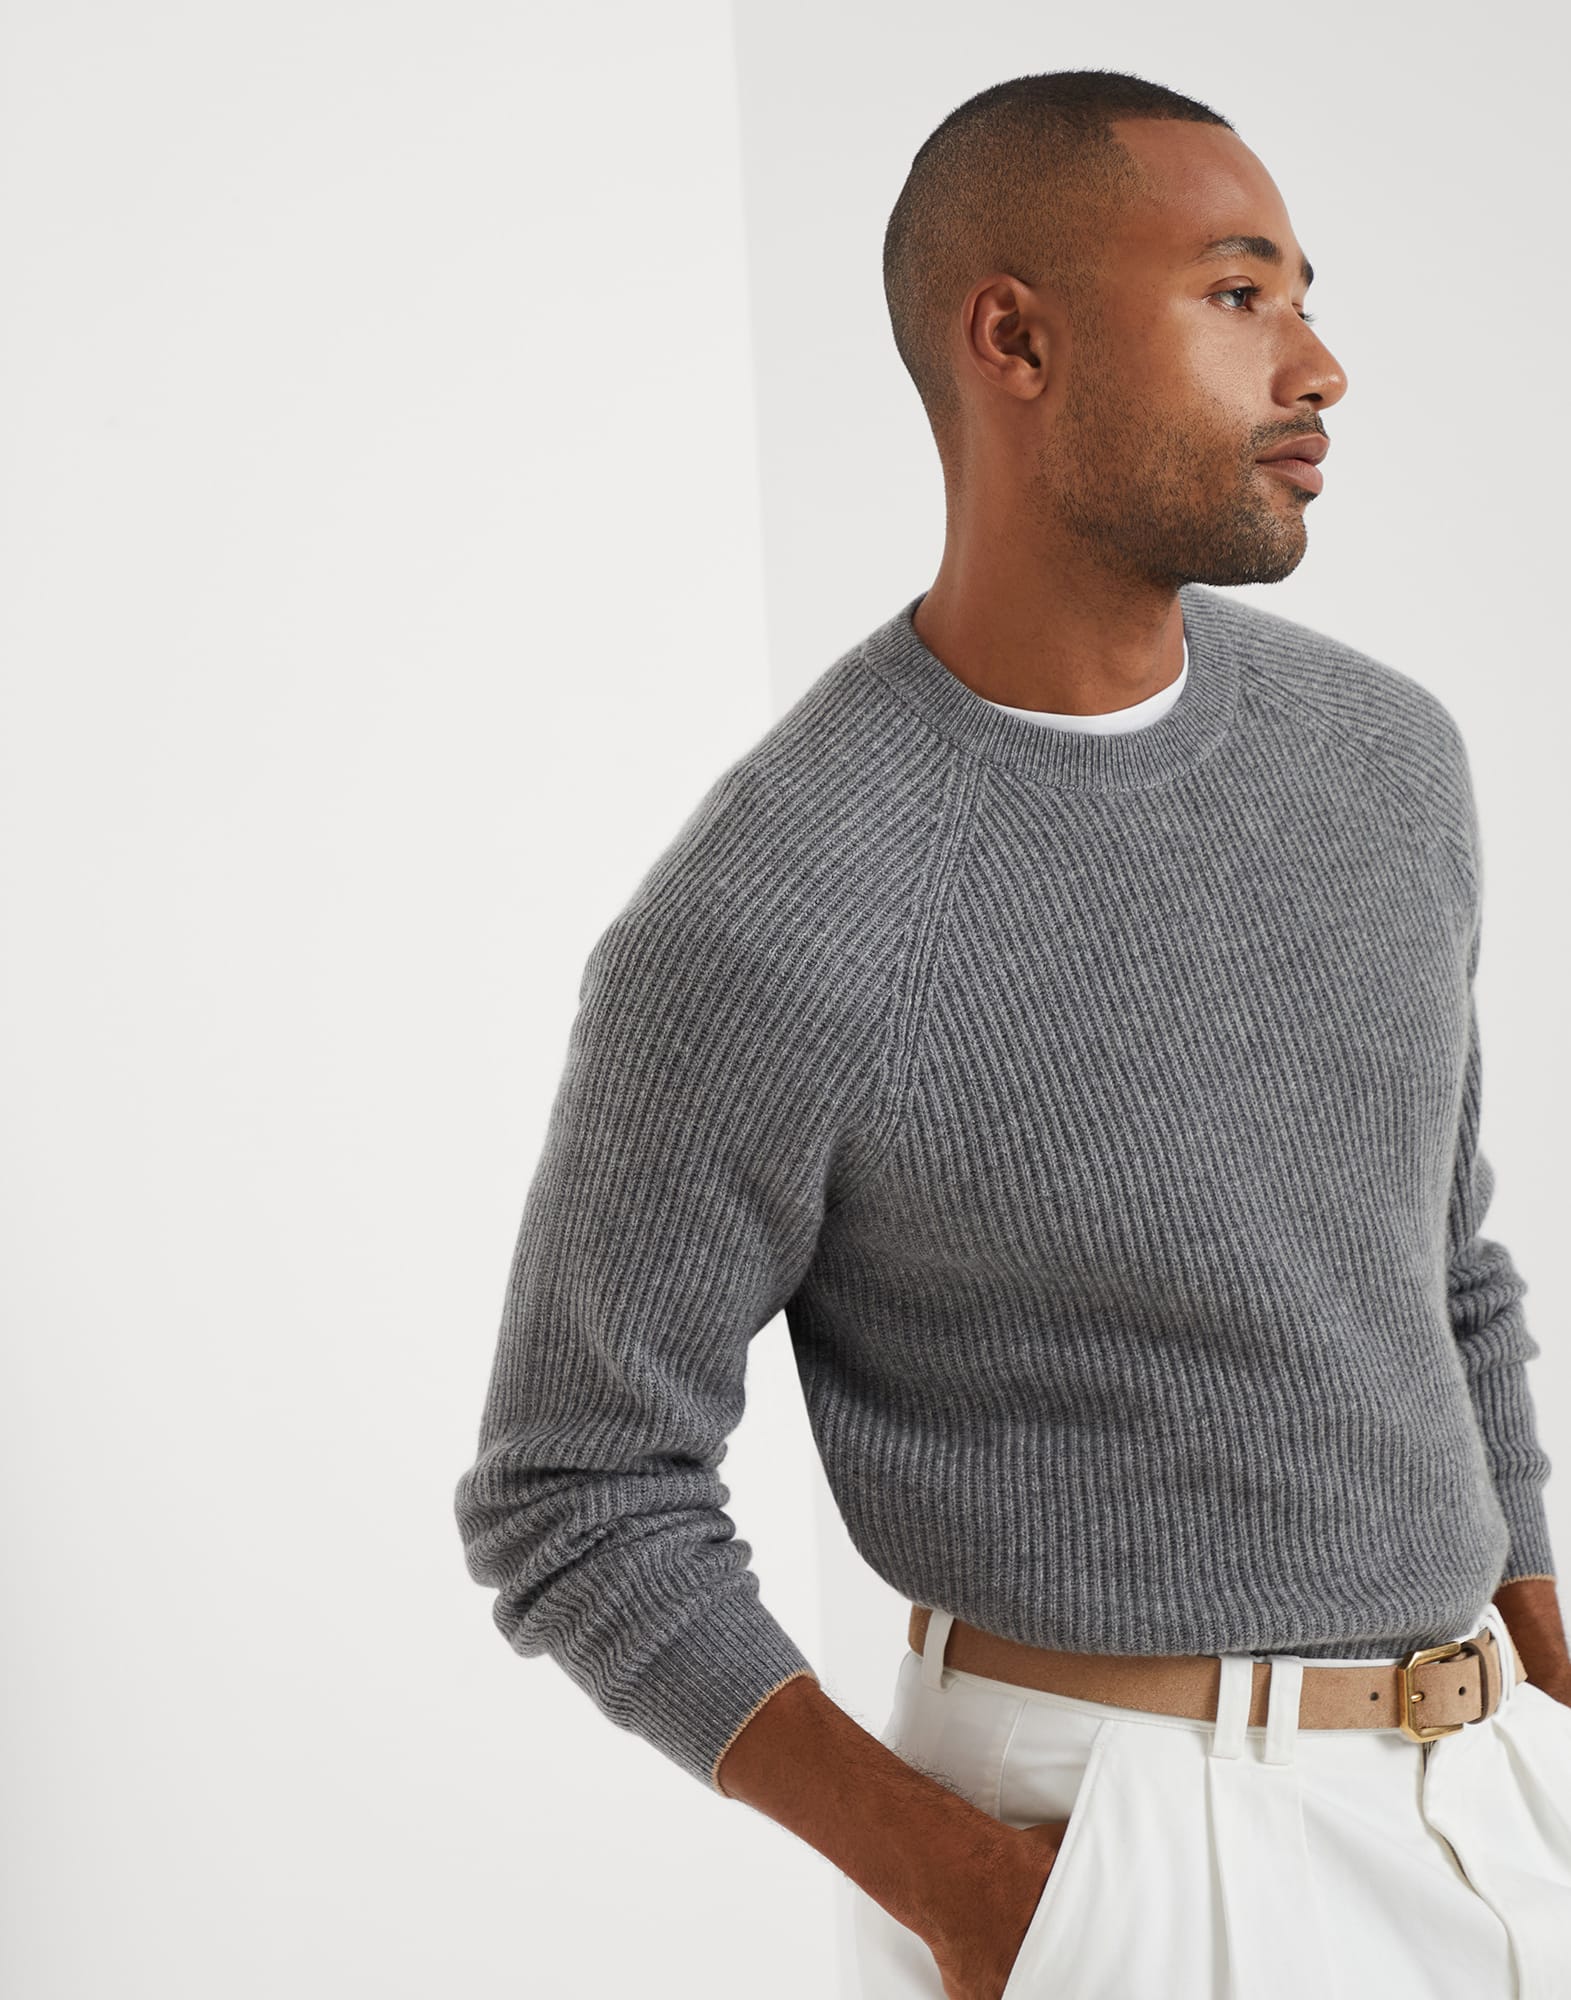 English Rib knit sweater (241M2274100) for Man